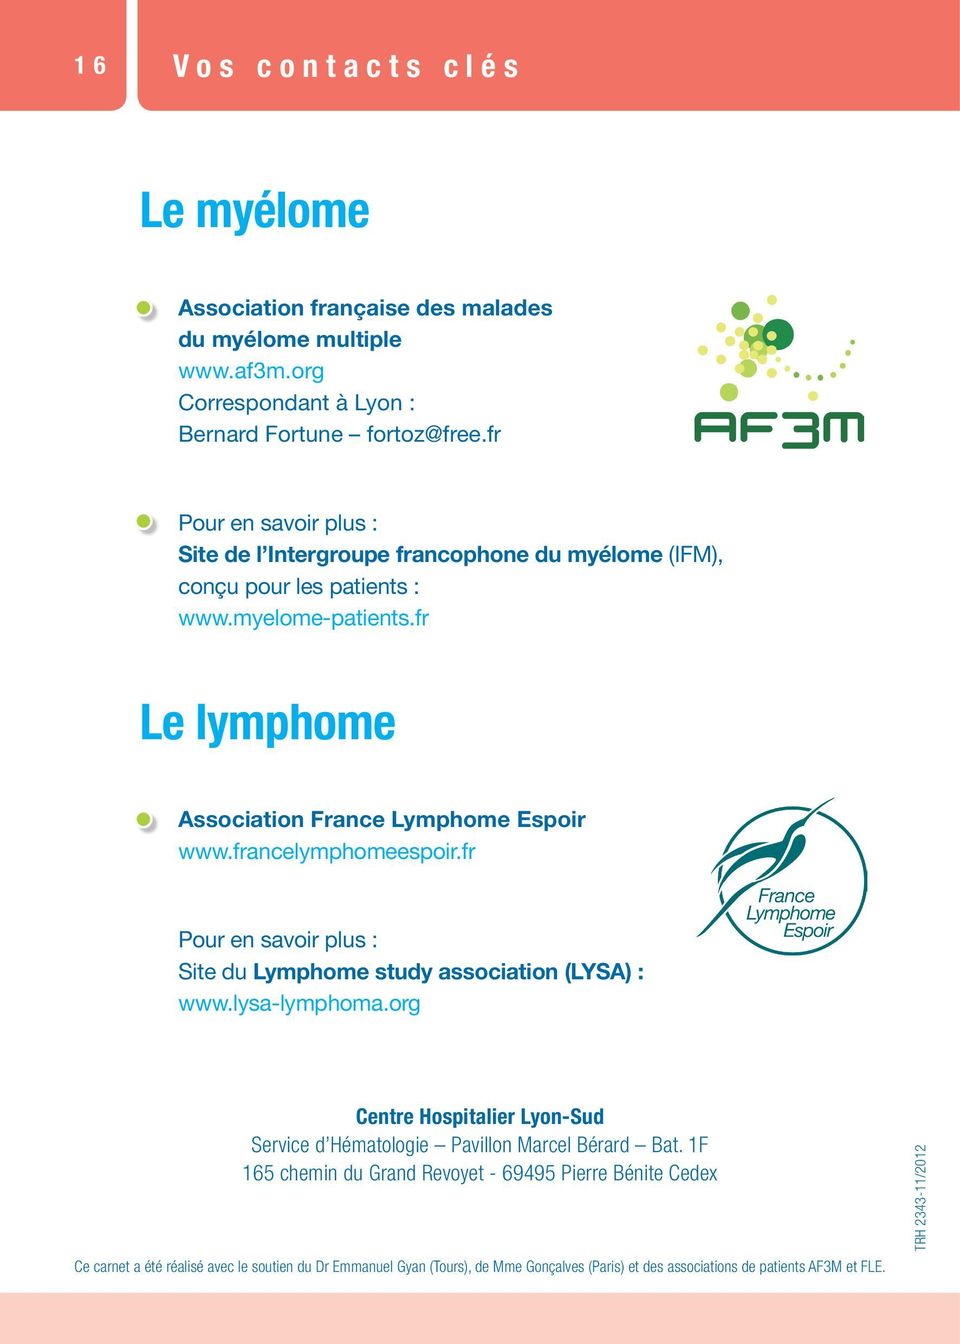 francelymphomeespoir.fr Pour en savoir plus : Site du Lymphome study association (LYSA) : www.lysa-lymphoma.